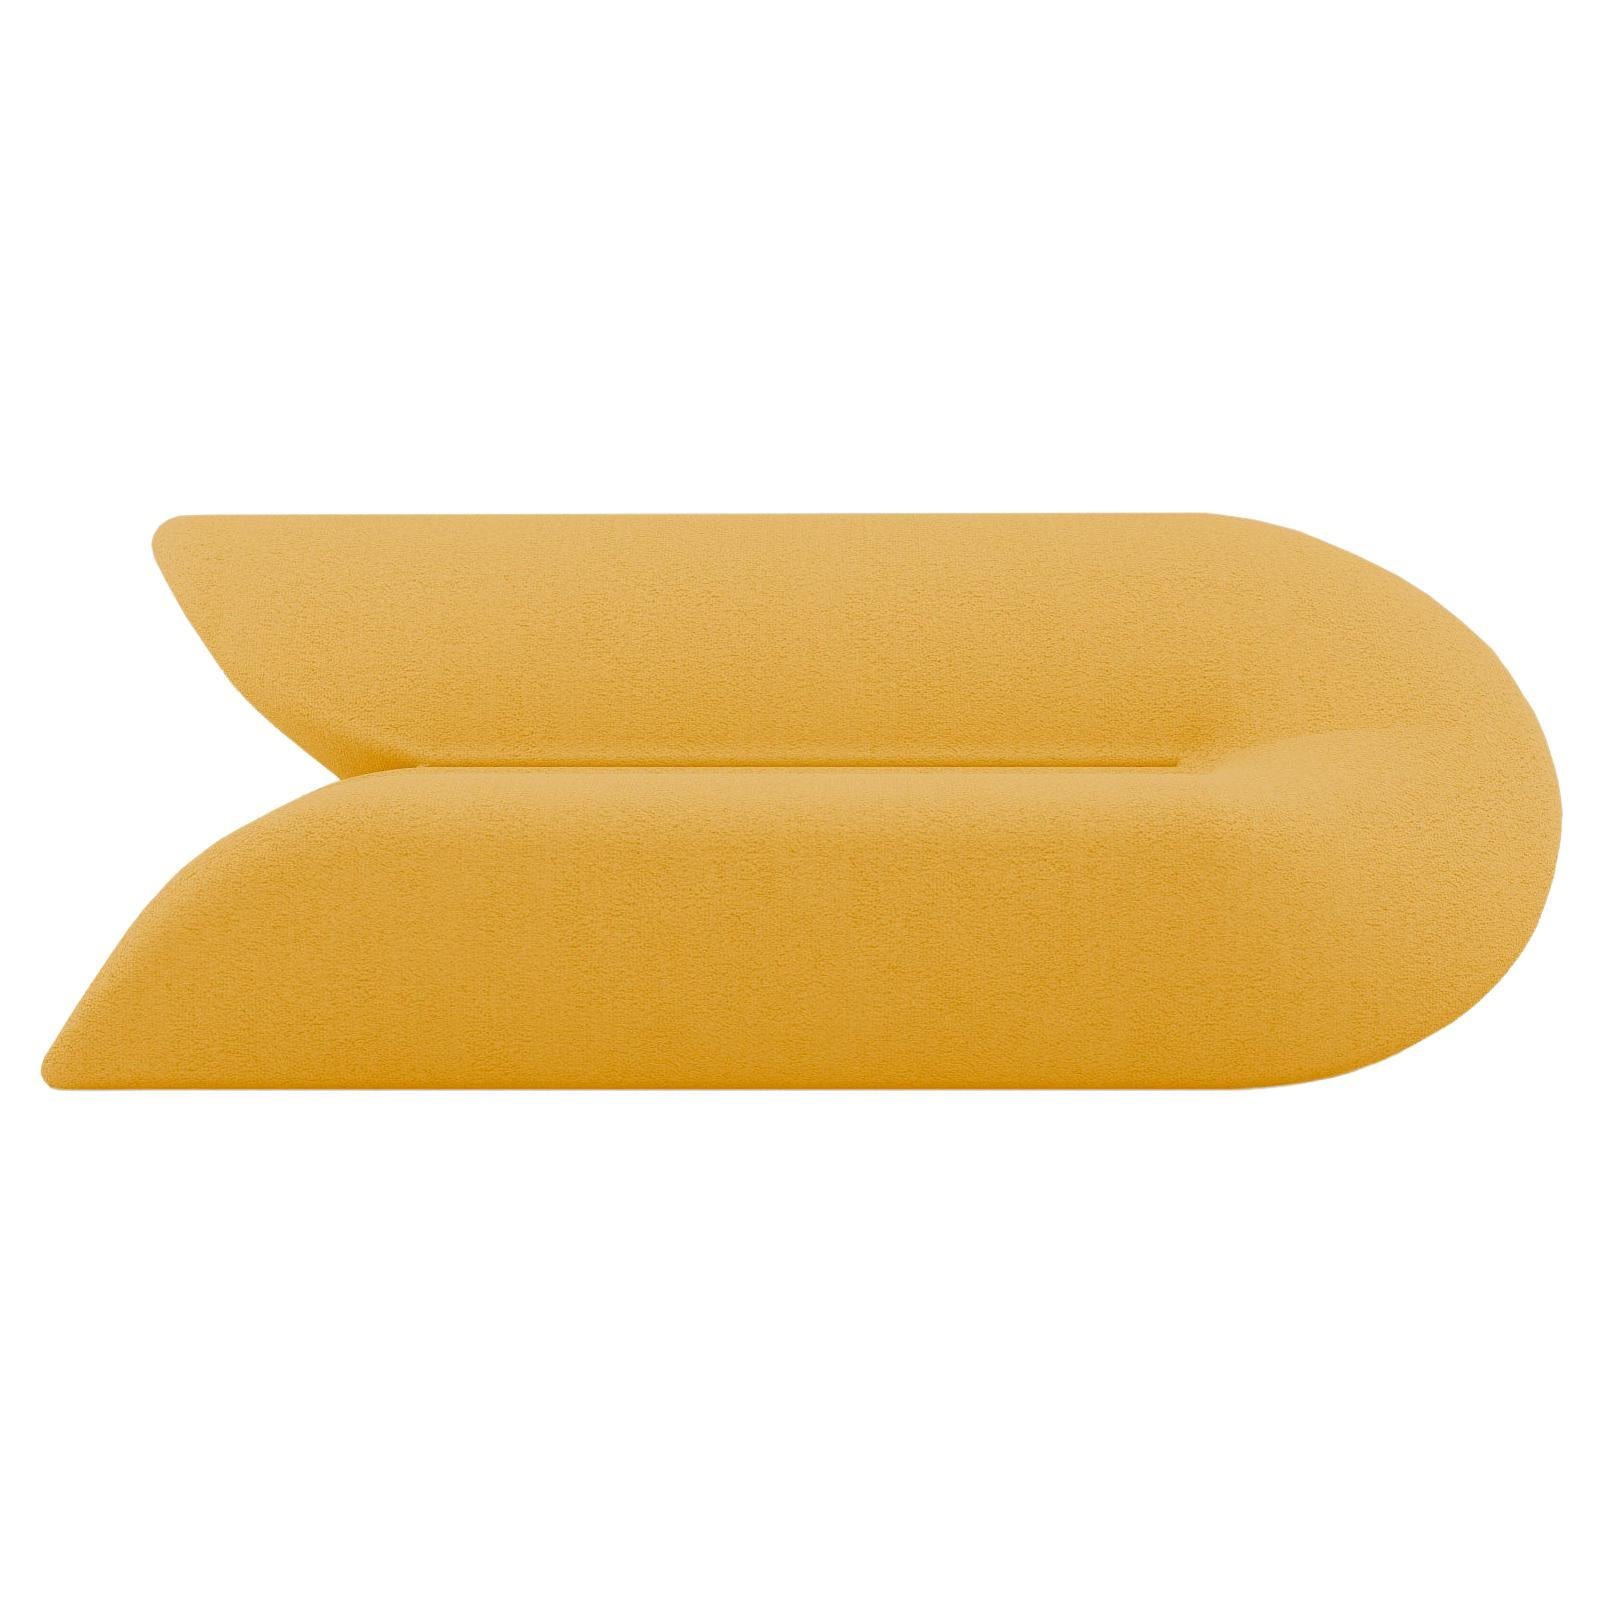 Delta Sofa - Modern Lemon Yellow Upholstered Three Seat Sofa For Sale